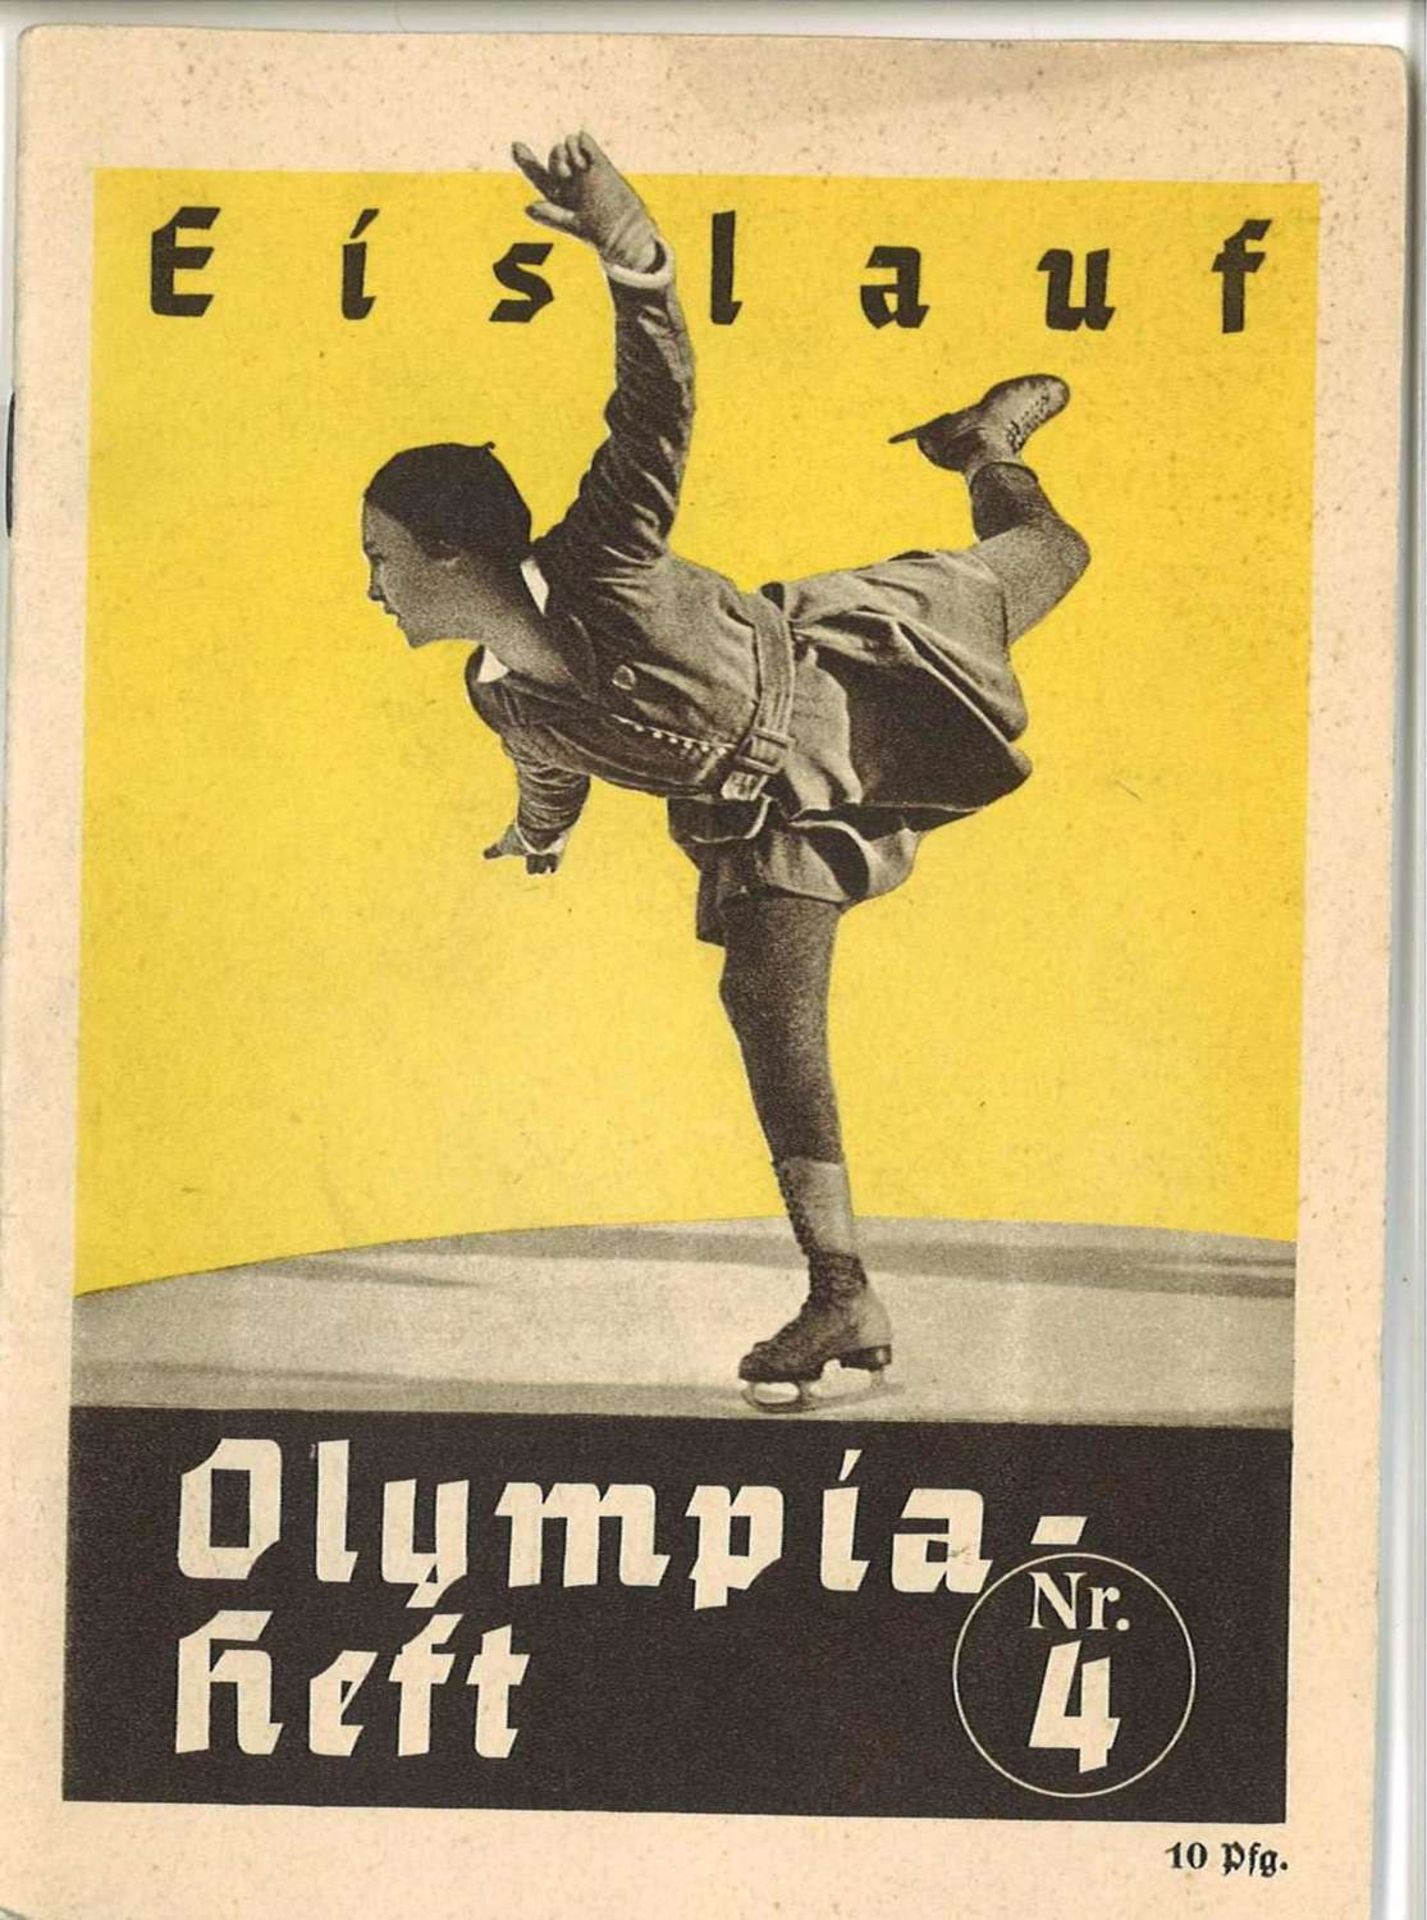 Berlin 1936, Olympia Heft, 32 Seiten, Eislauf Nr. 4Berlin 1936, Olympia Heft, 32 pages, skating